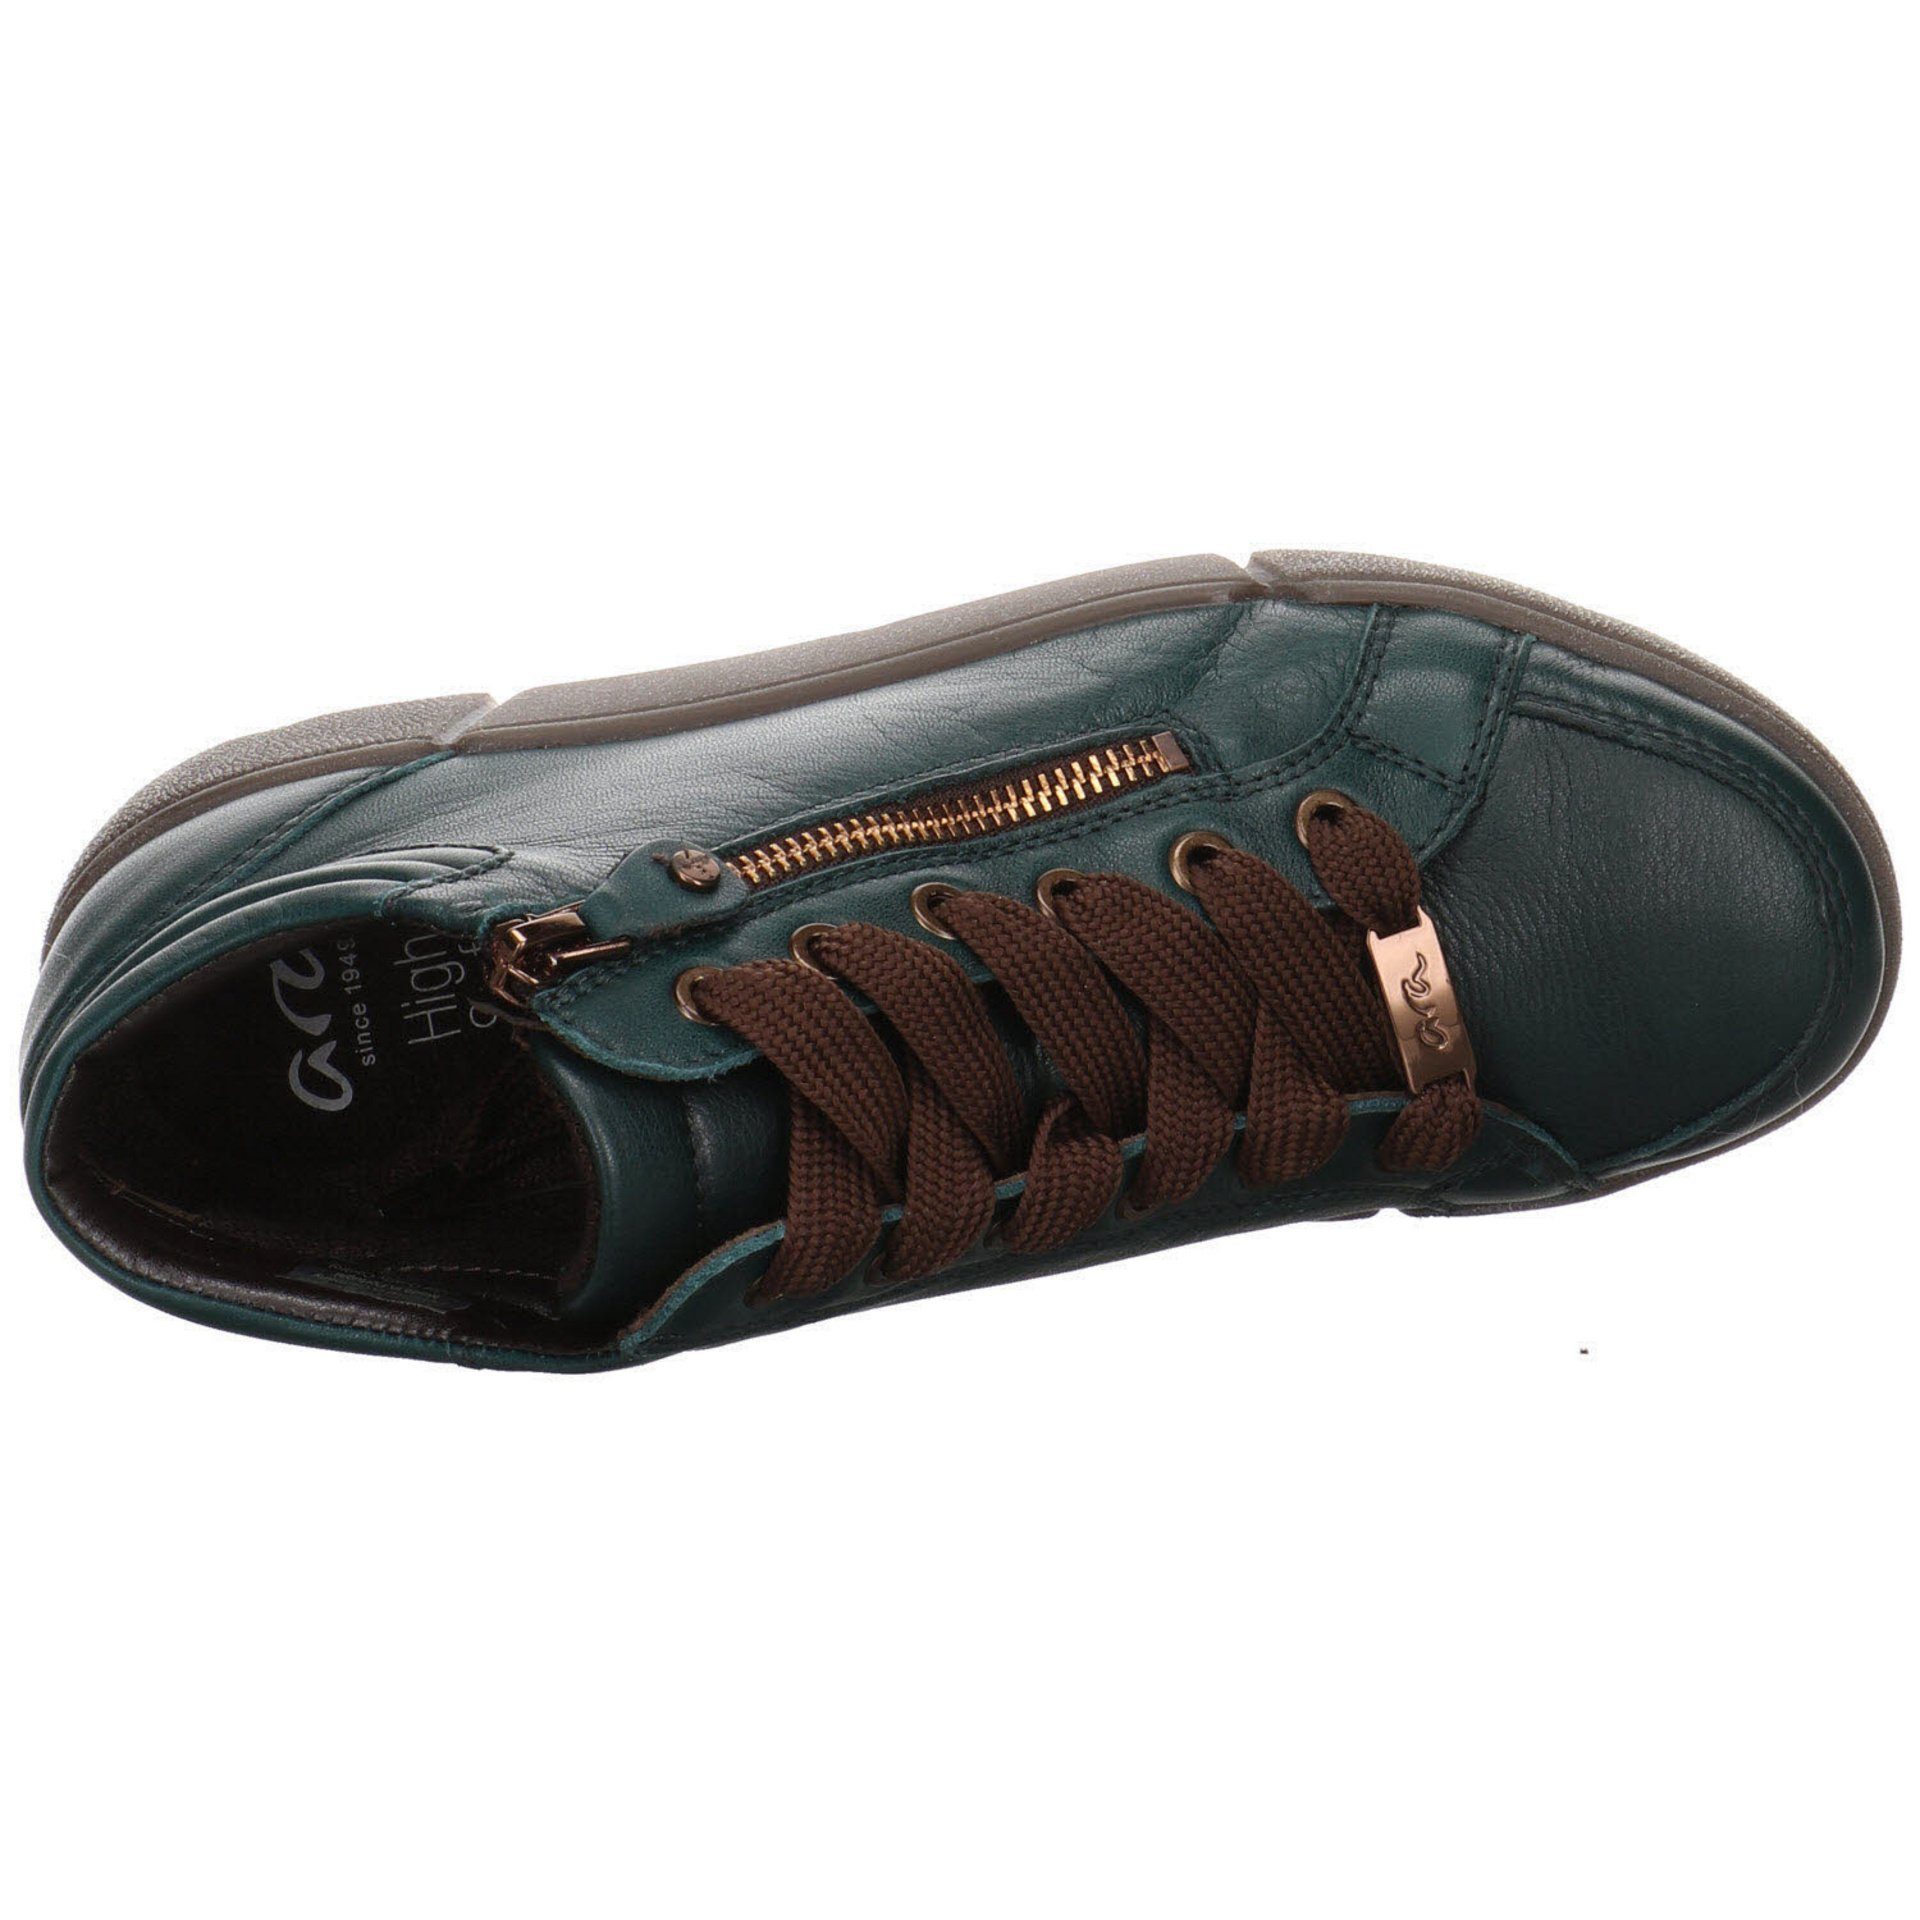 Sneaker High Rom Ara Glattleder grün 043678 Sneaker Soft Schuhe Sneaker Damen